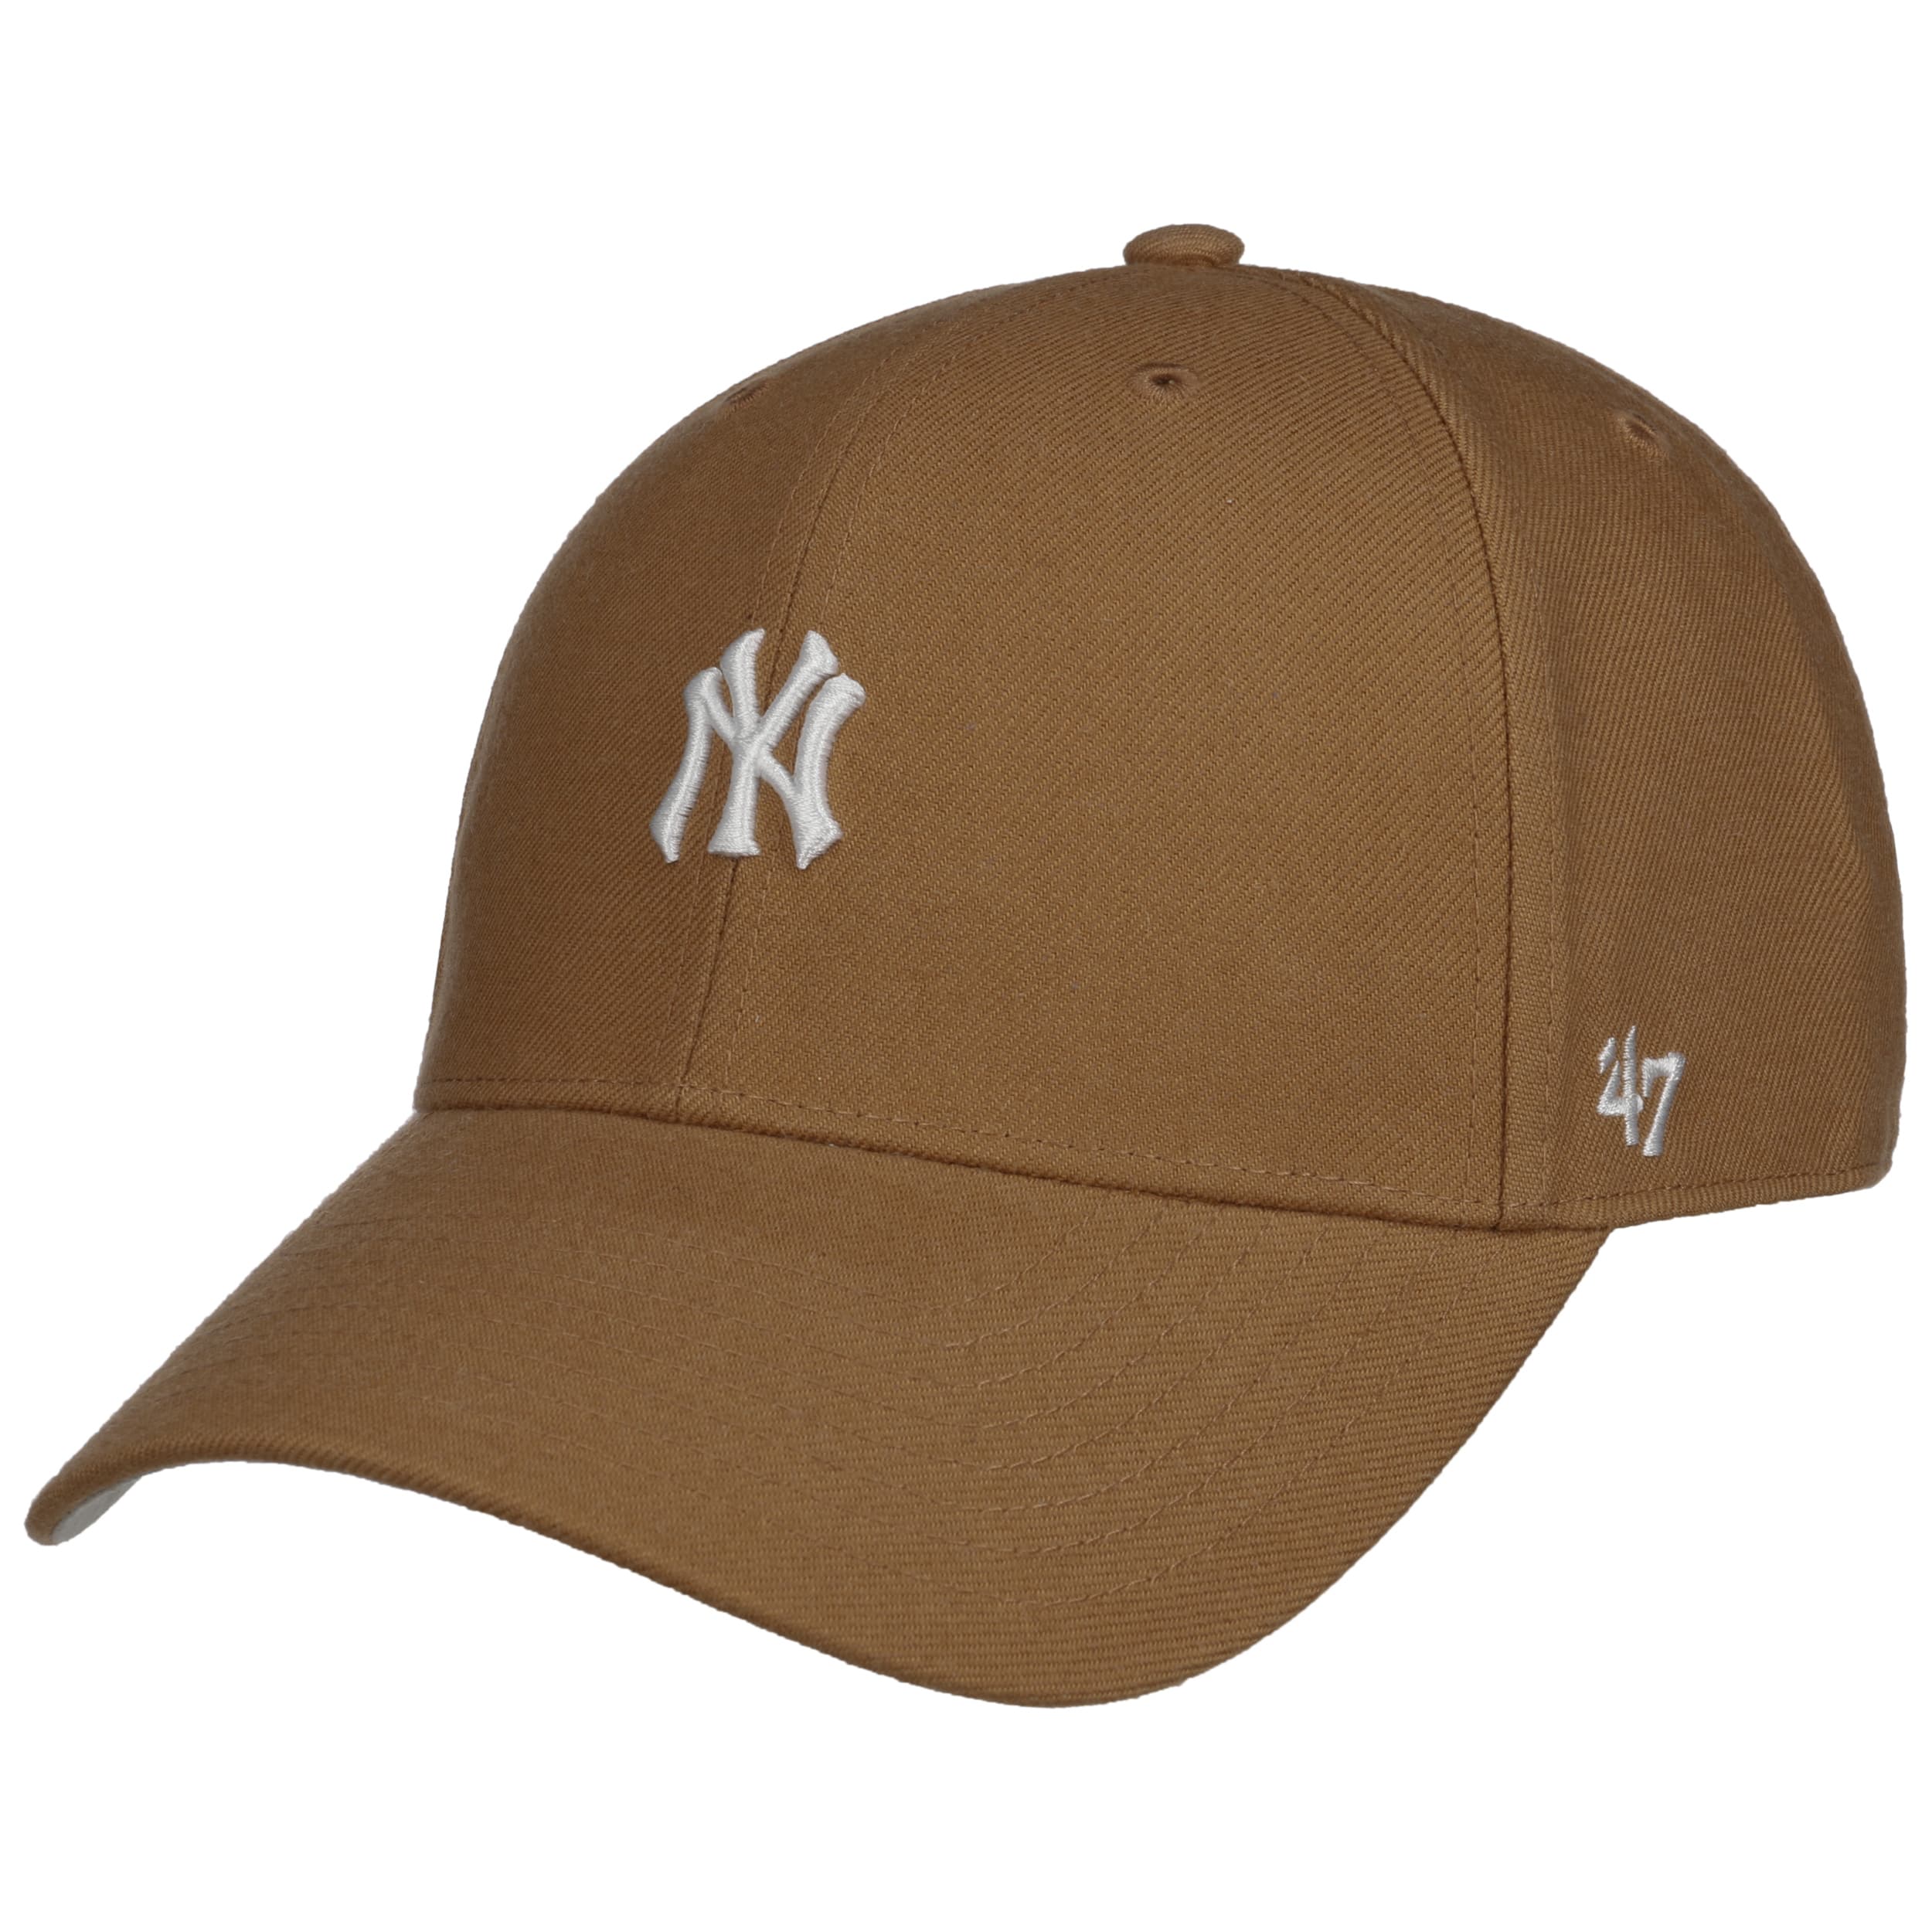 47 Brand Strapback Cap - Clean Up New York Yankees Camel